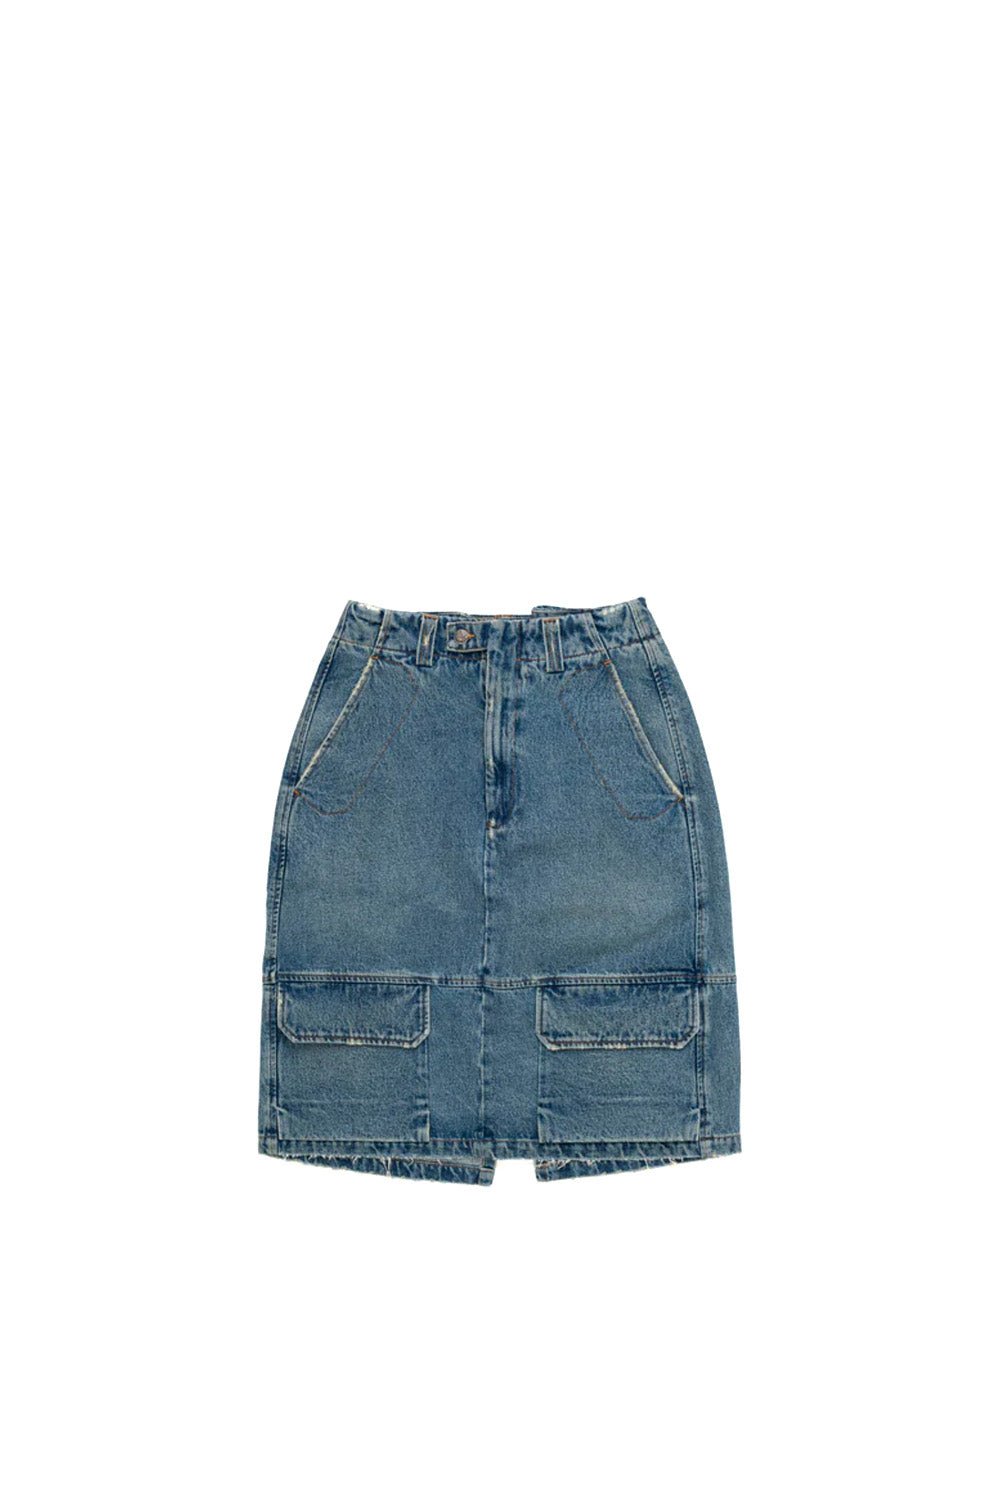 SK(8)RT Denim skirt. Front & back pockets. 100% cotton HTC LOS ANGELES